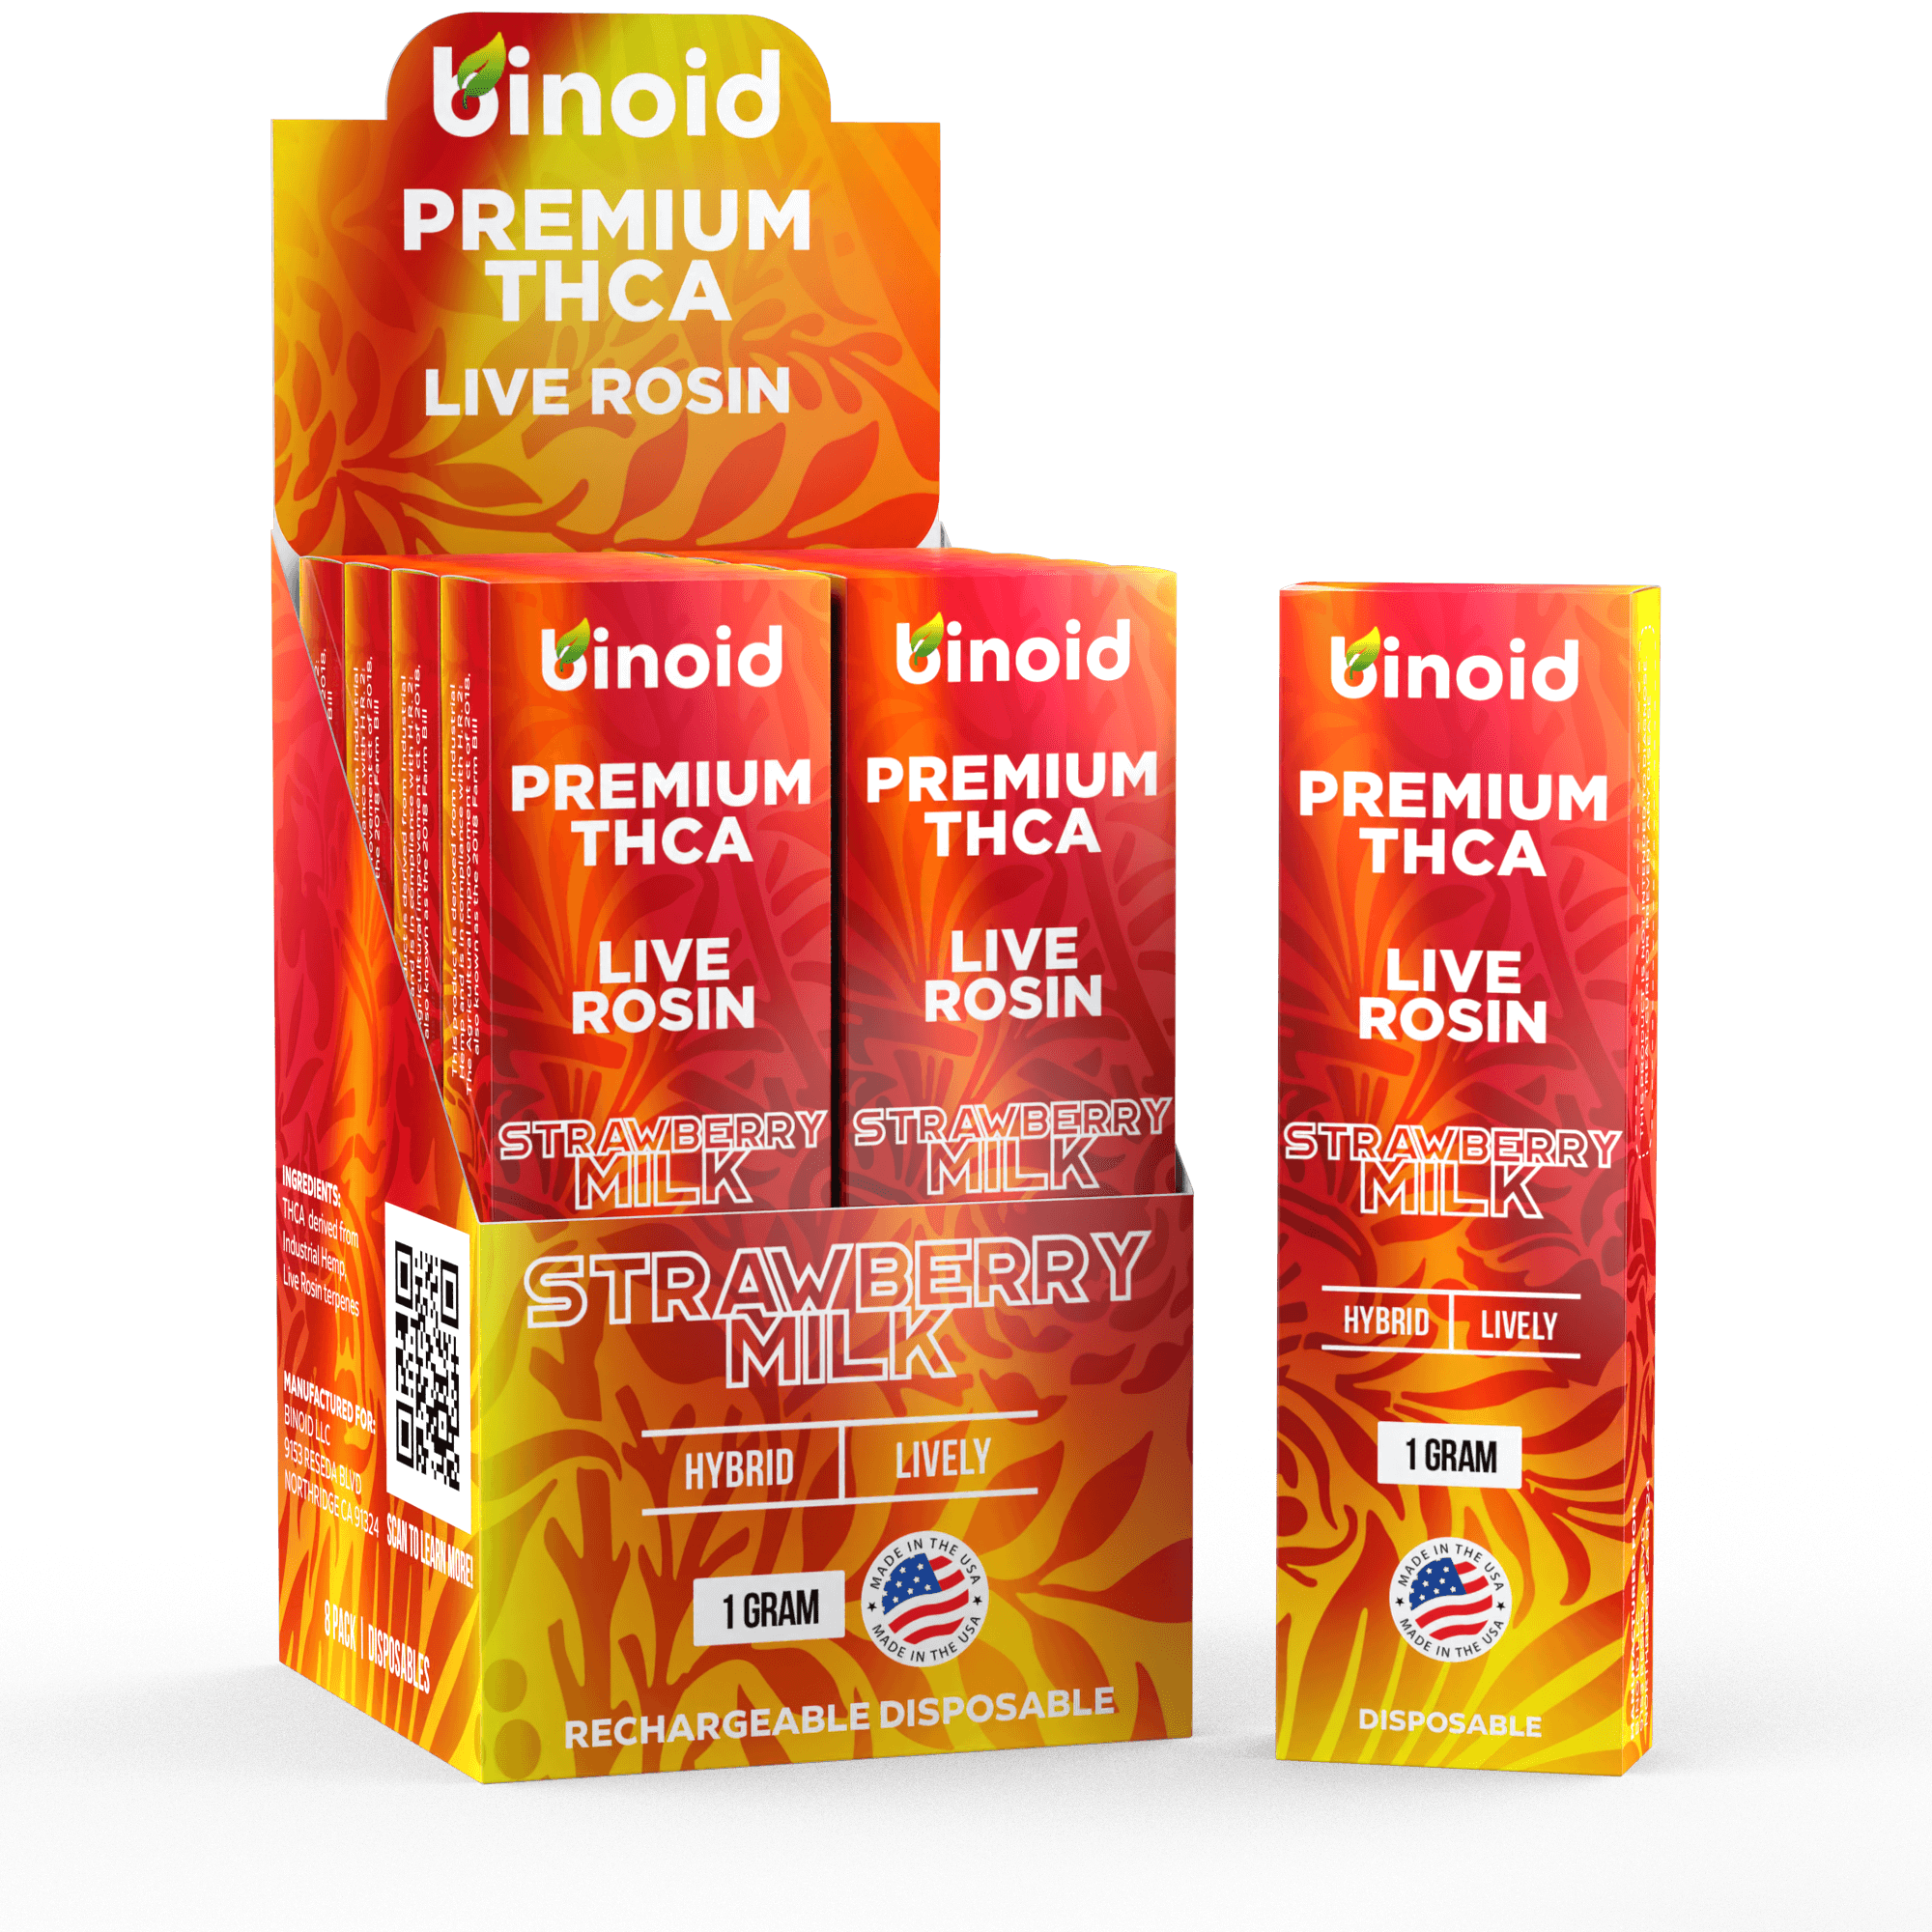 Binoid 1 Gram THCA Disposable Vapes – Live Rosin Best Price